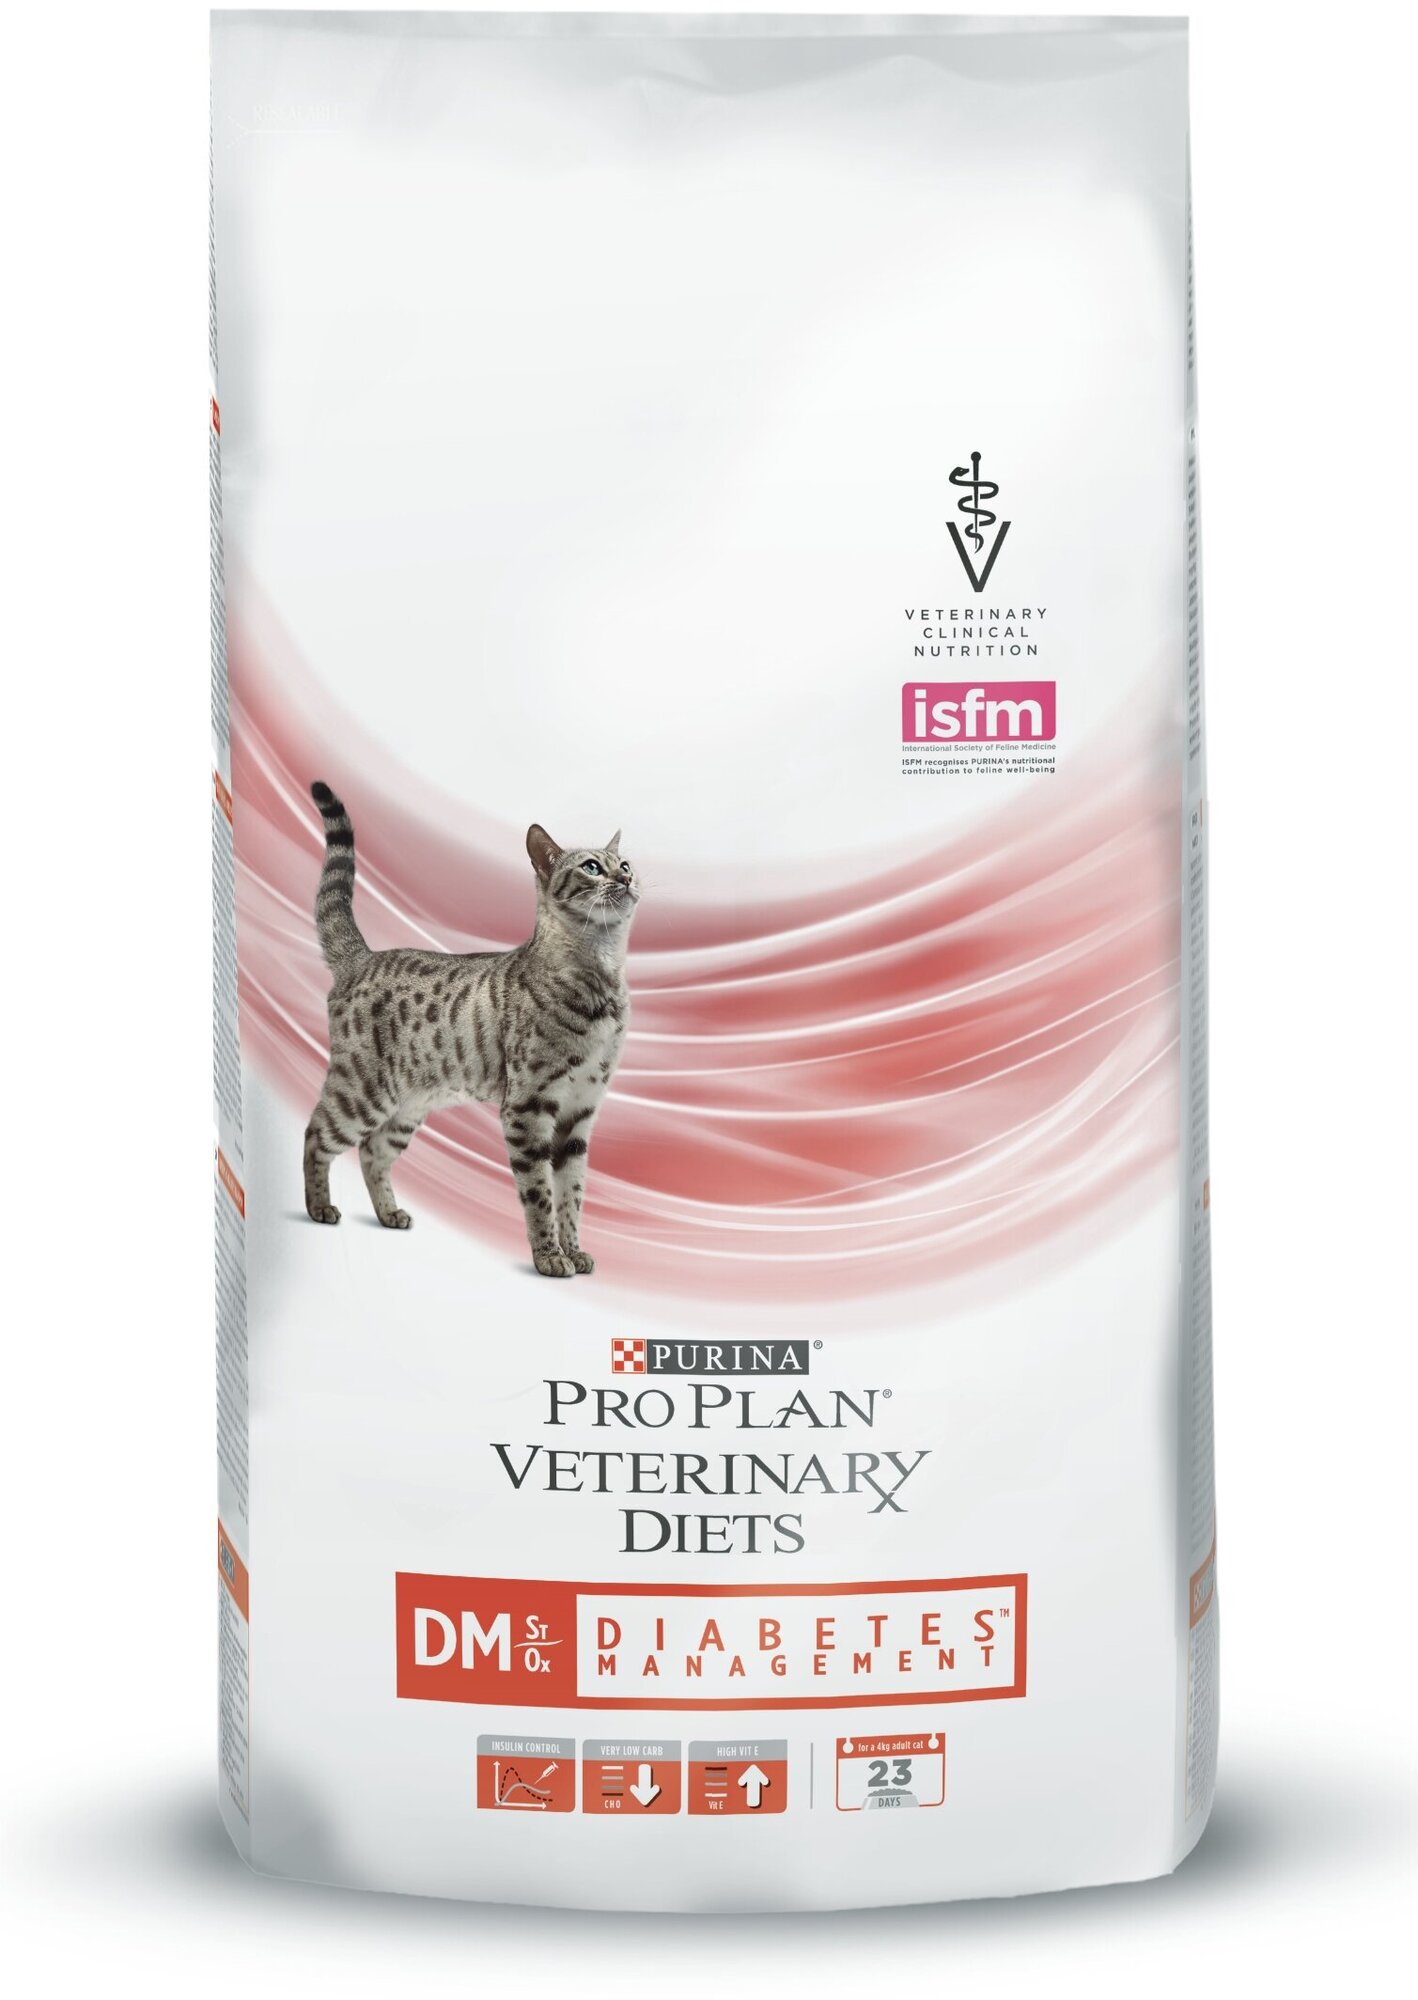 Pro Plan Veterinary Diets DM Diabetic Management корм для кошек при сахарном диабете Диетический, 1,5 кг.